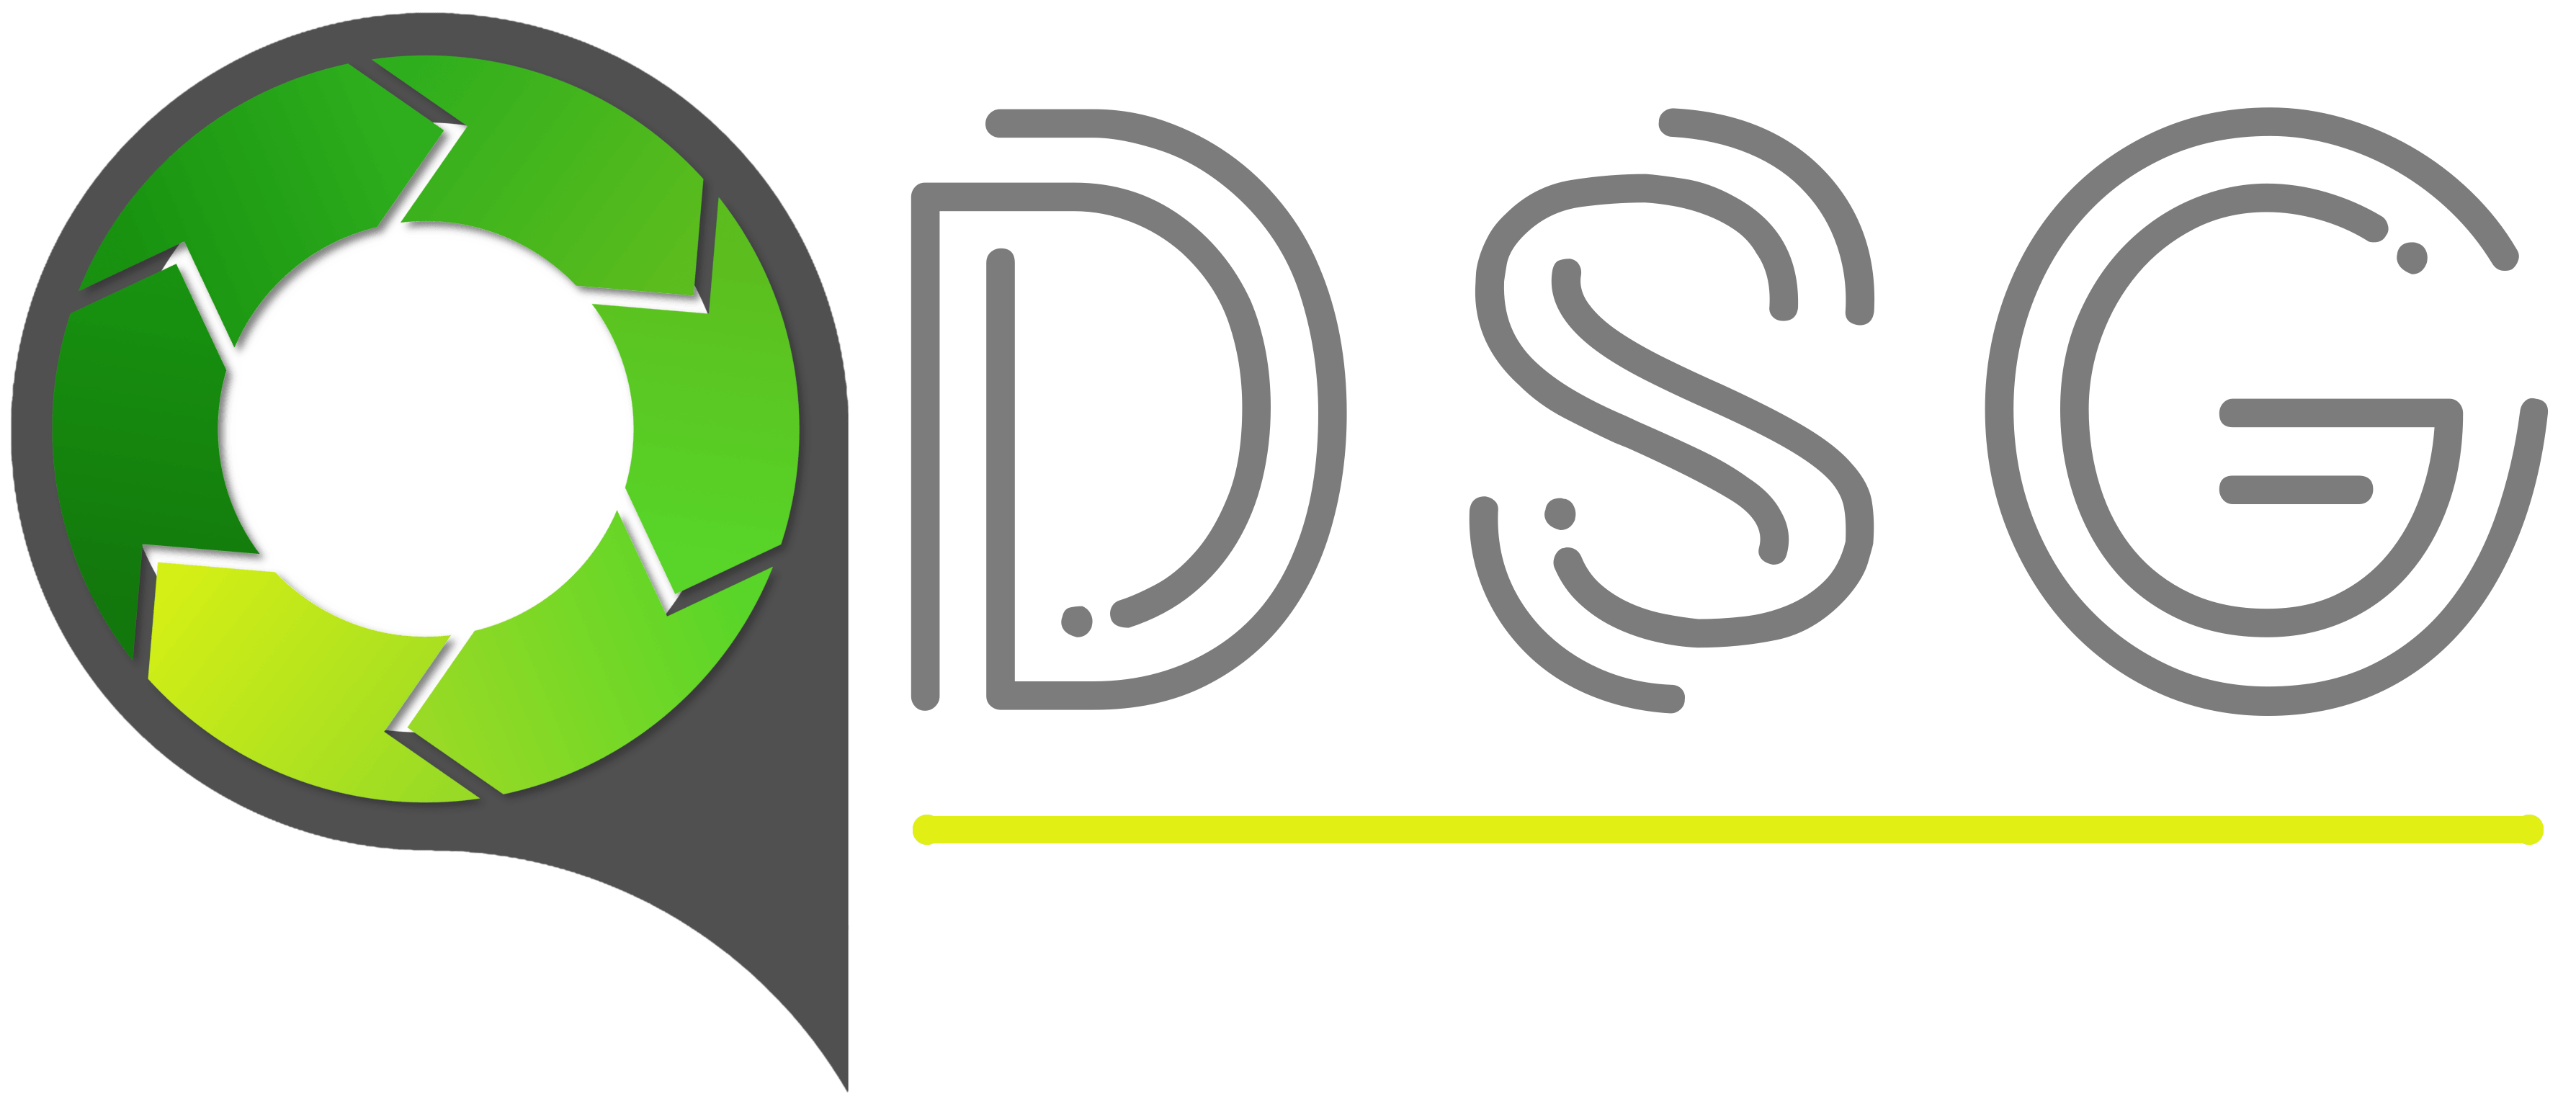 Logo DSG